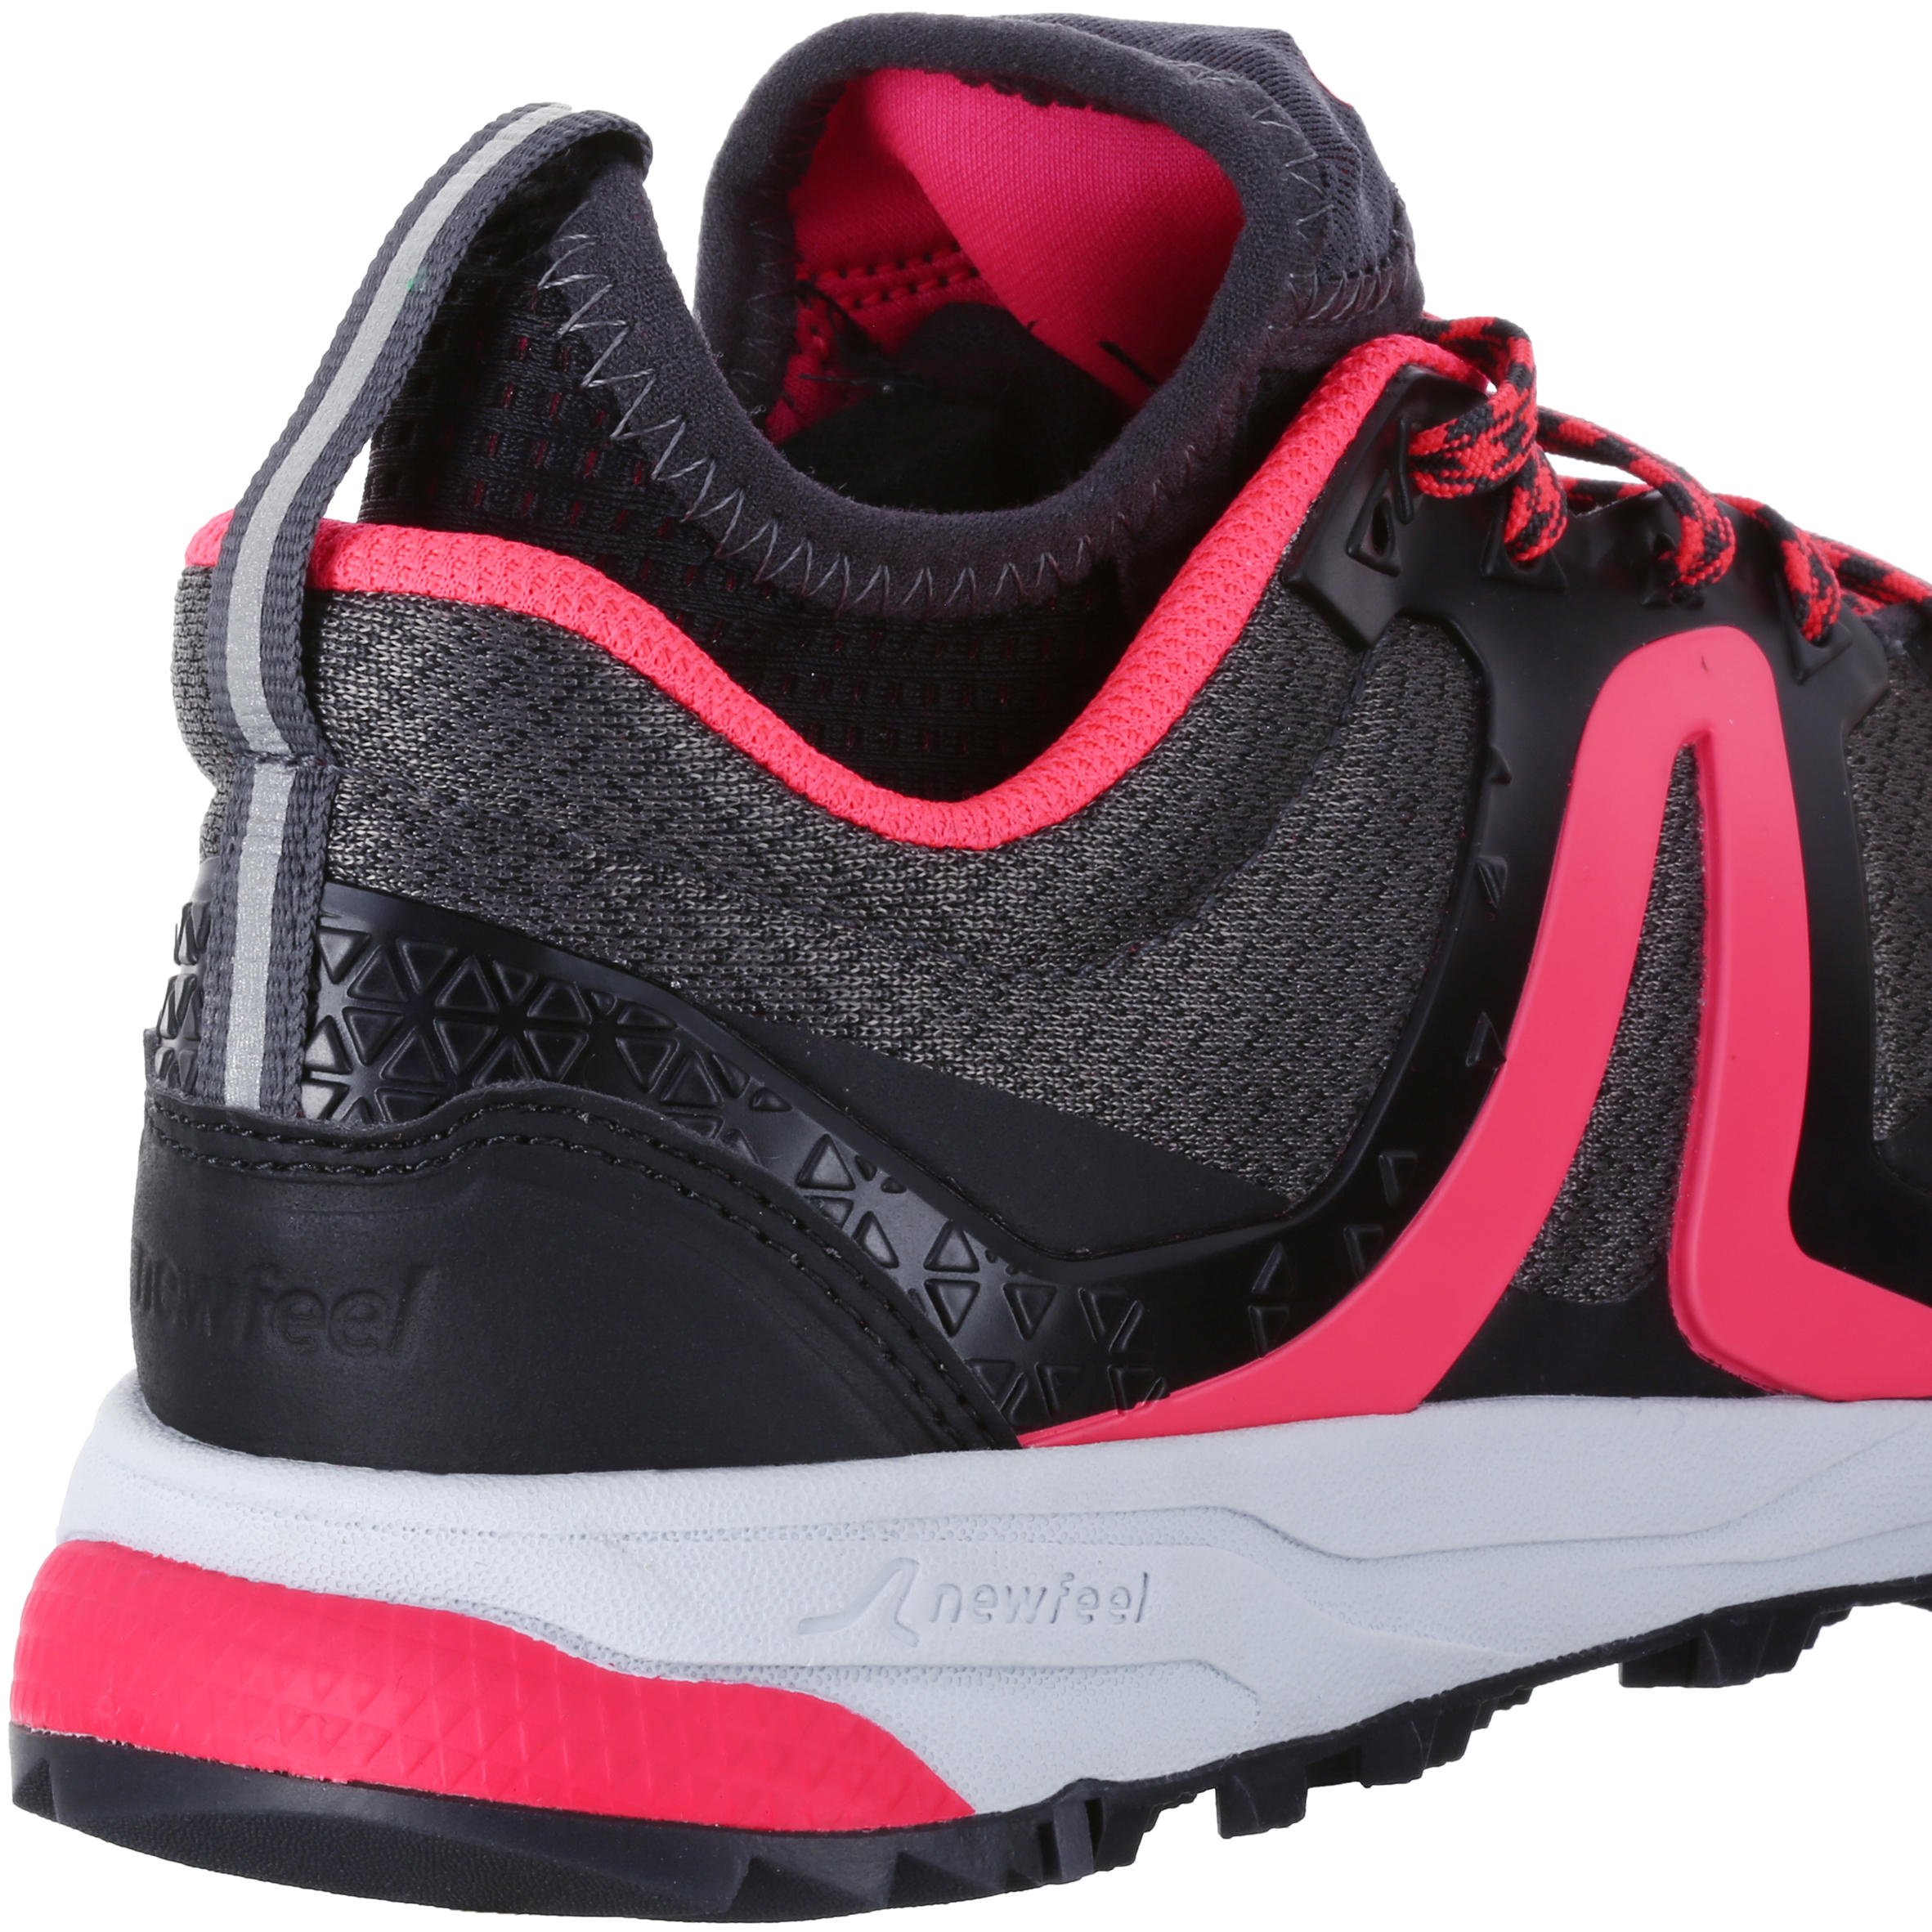 NW 900 Flex-H women's Nordic walking shoes black/pink 5/6